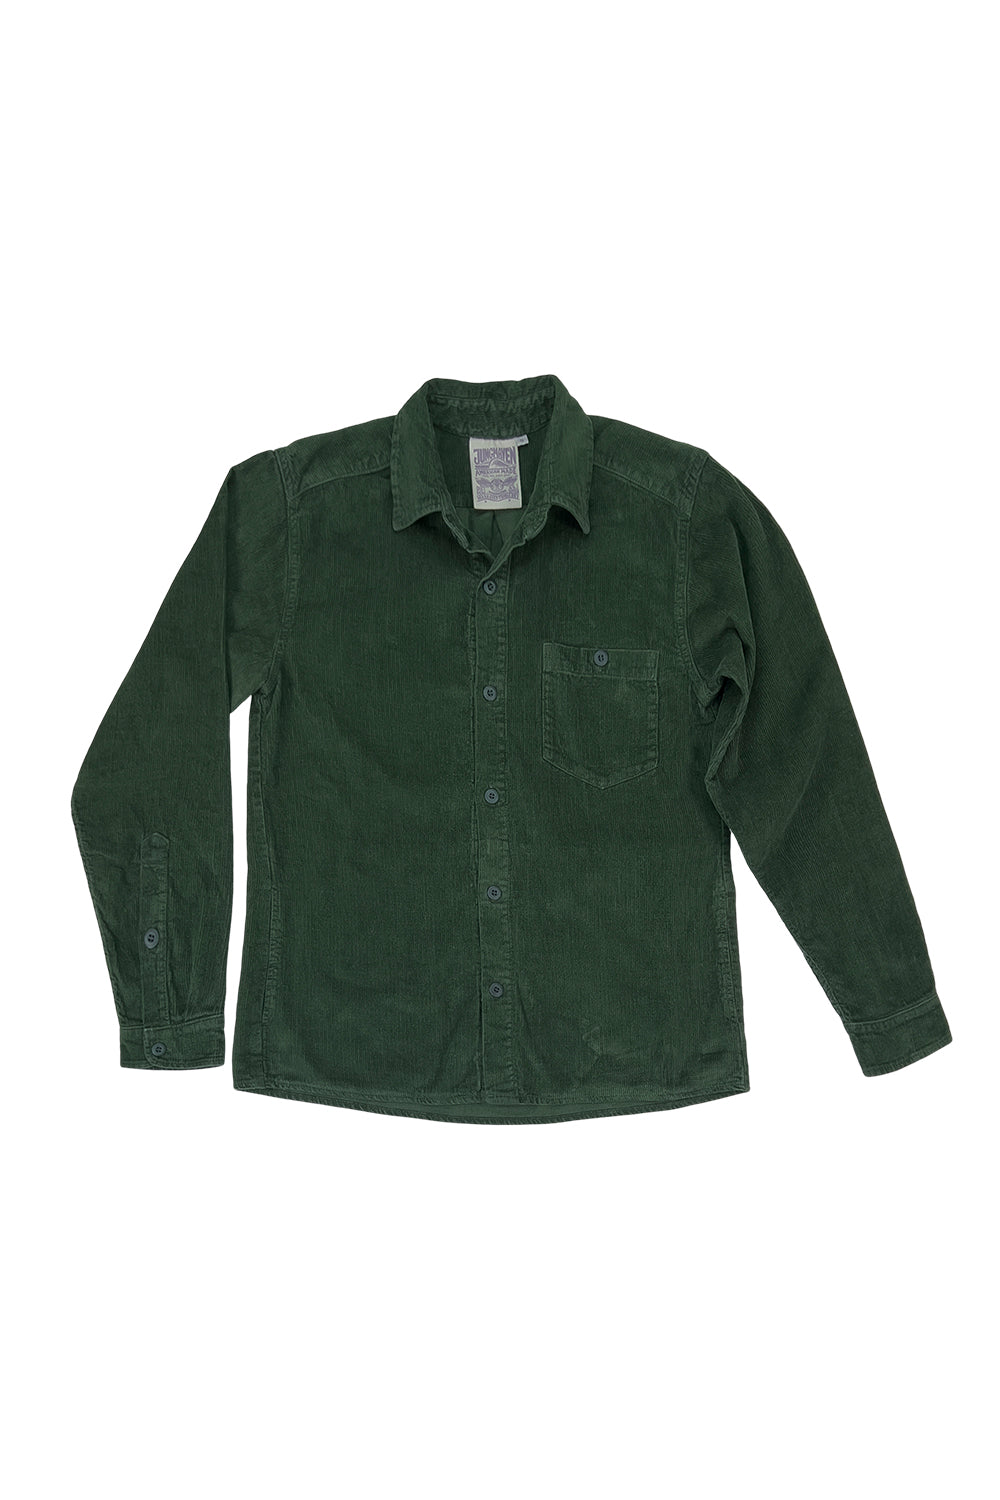 Oxnard Shirt Jacket | Jungmaven Hemp Clothing & Accessories Color: Hunter Green